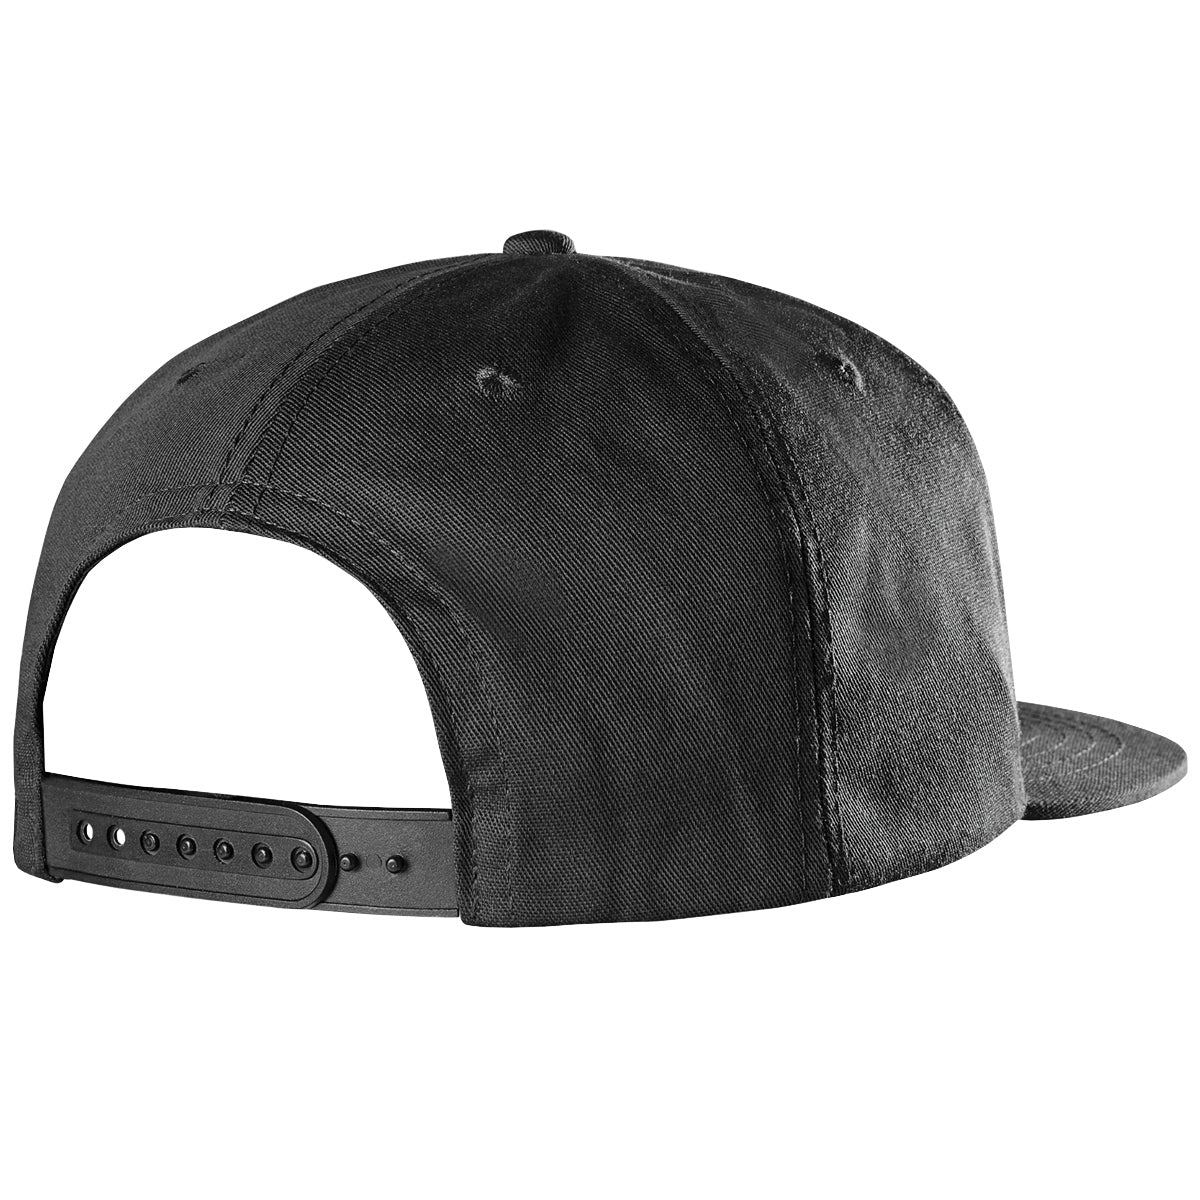 Emerica Classic Snapback Hat - Black/White image 2